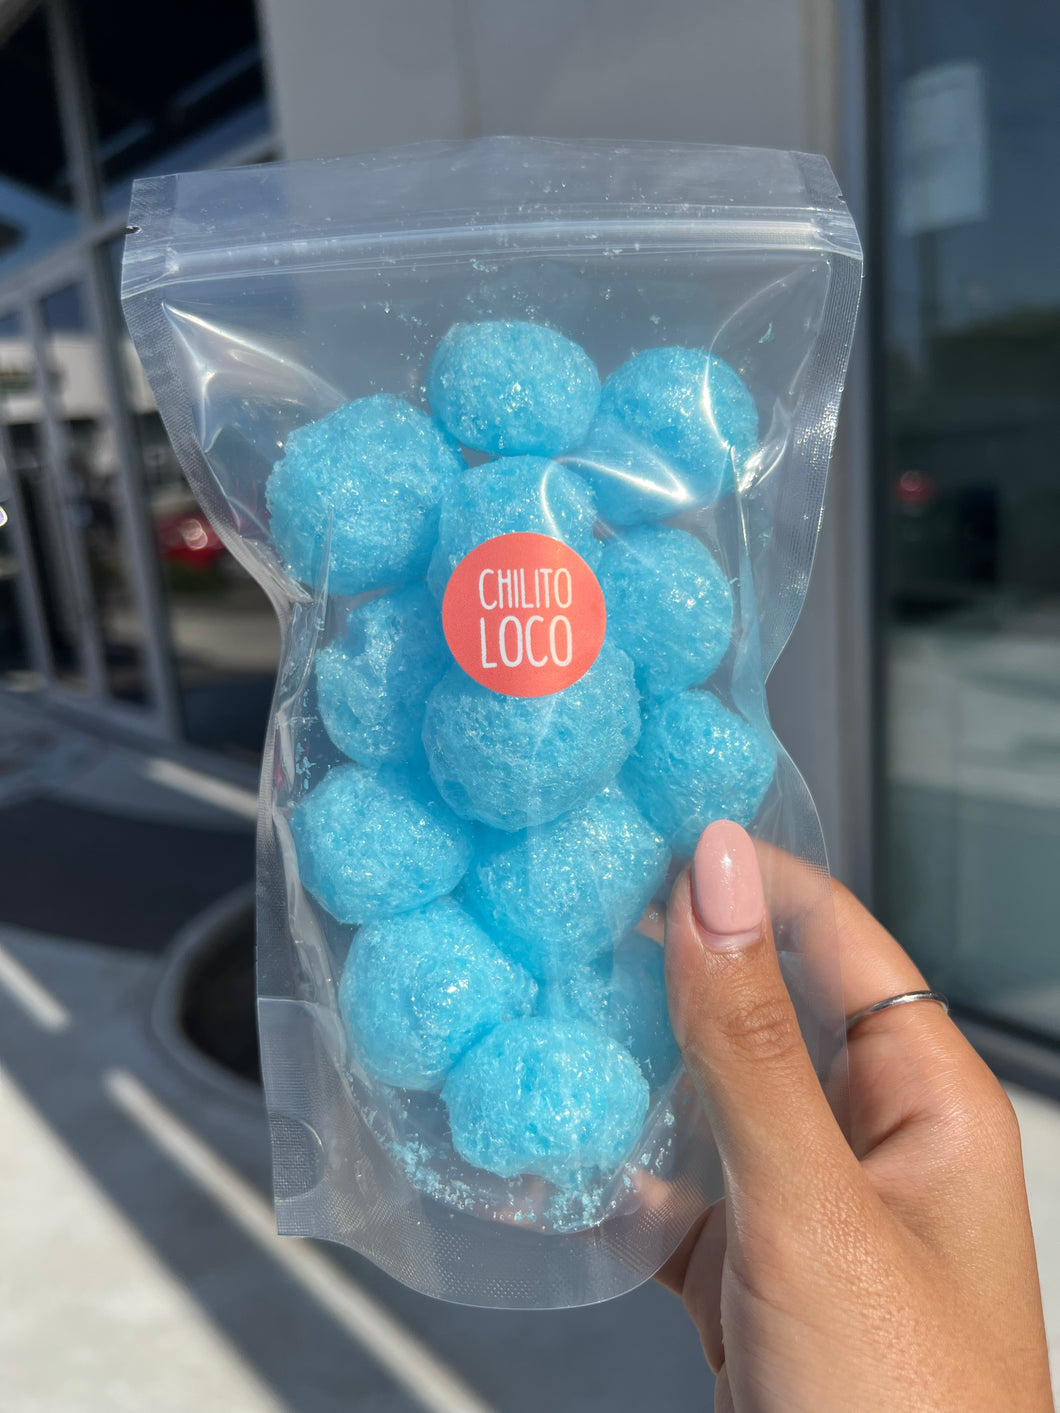 Limited Edition Blue Razz Puff balls